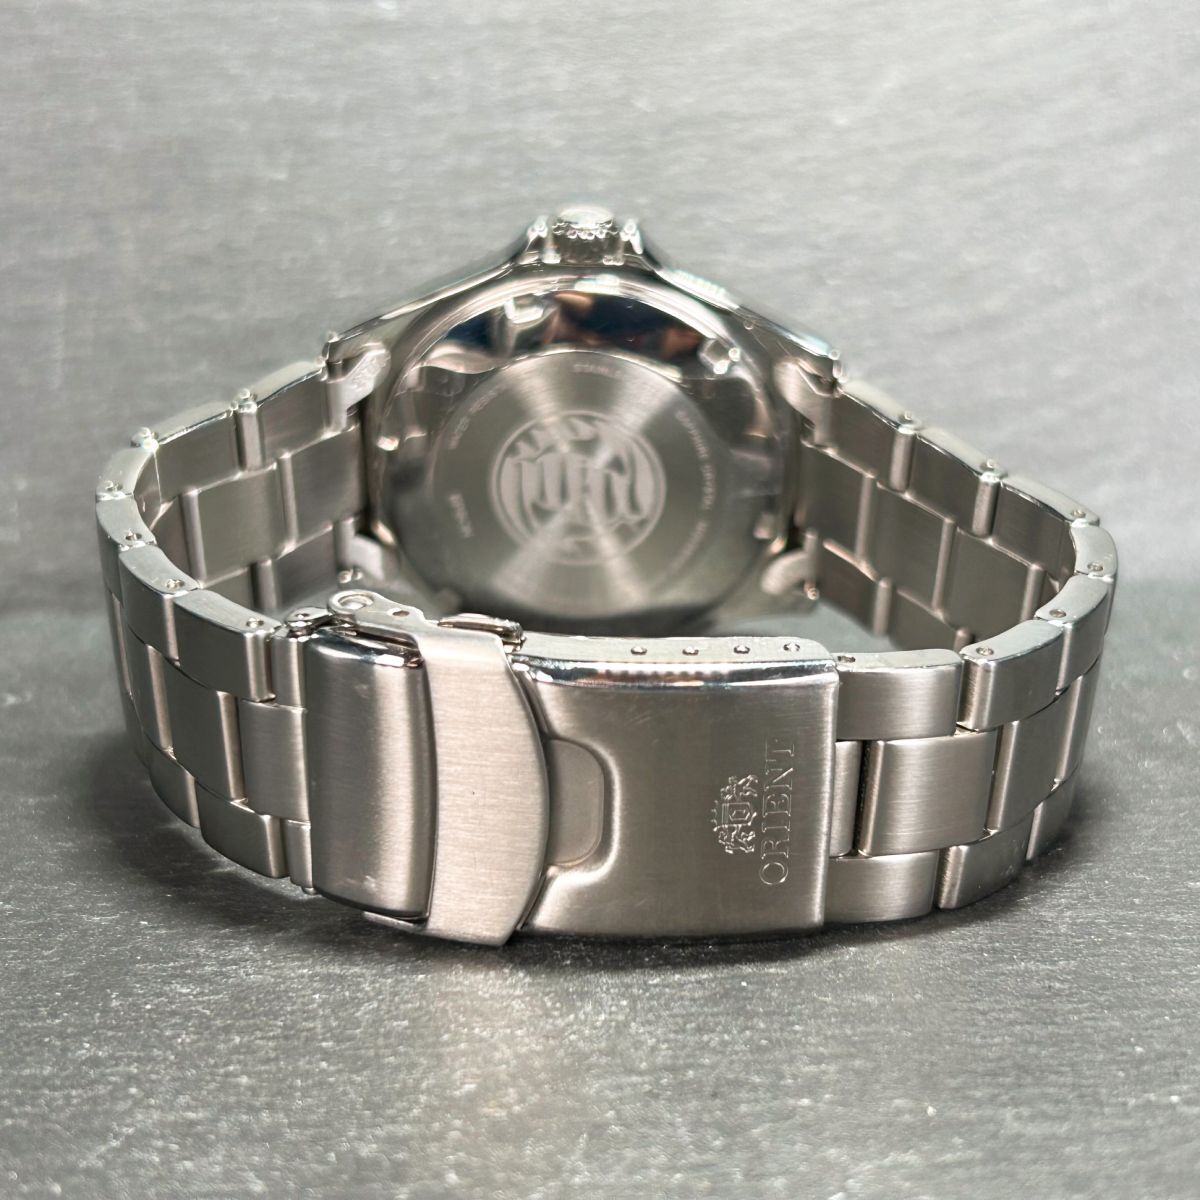  new goods ORIENT Orient RA-AA0004E19B MAKO3mako22 stone wristwatch self-winding watch analogue day date calendar green stainless steel 